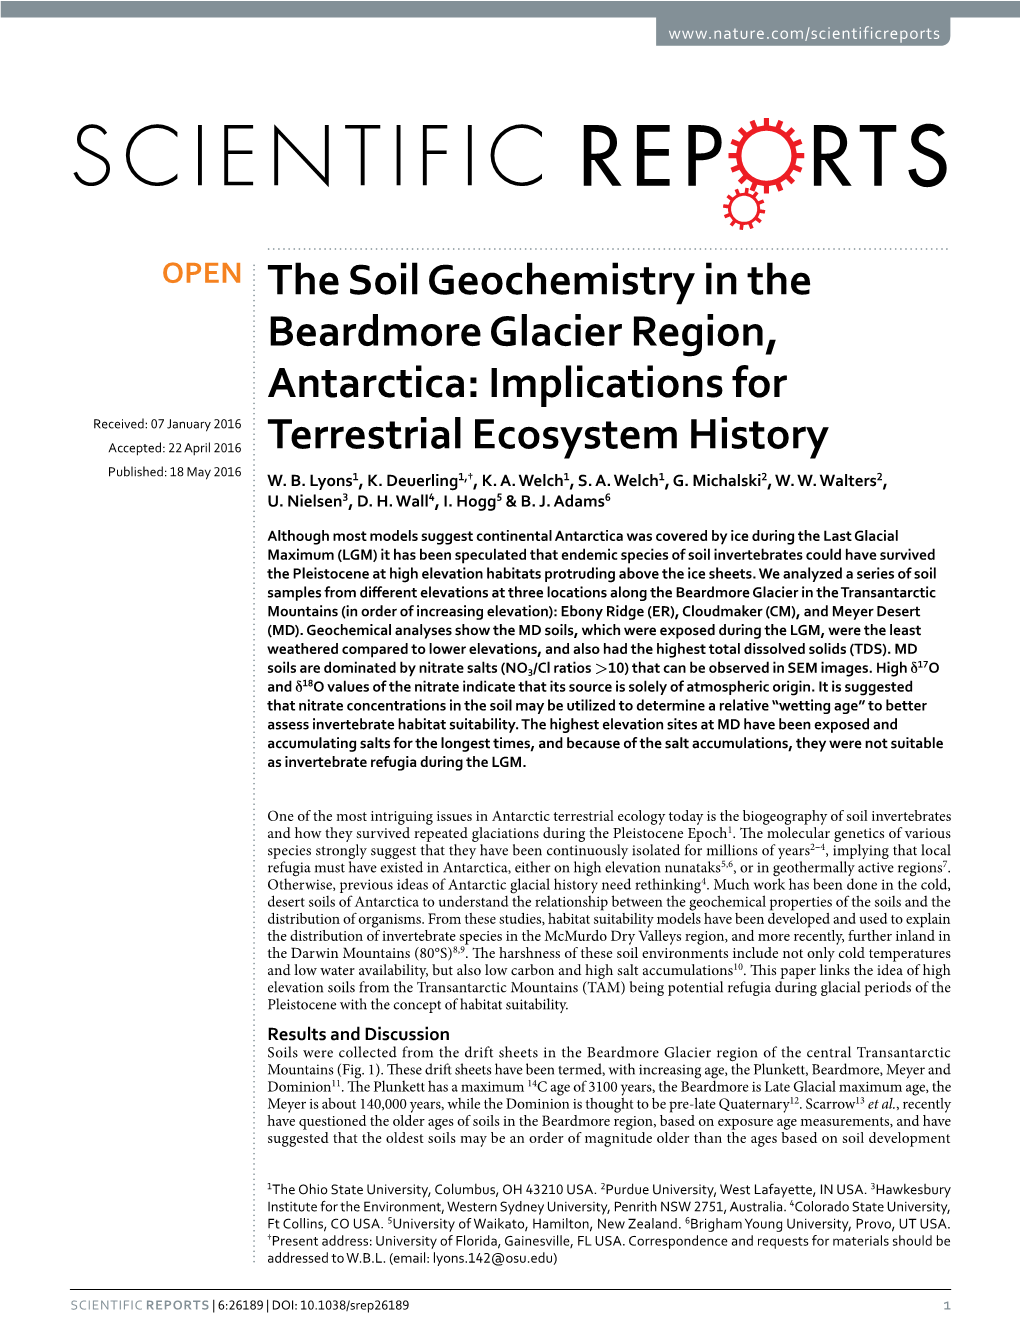 The Soil Geochemistry in the Beardmore Glacier Region, Antarctica